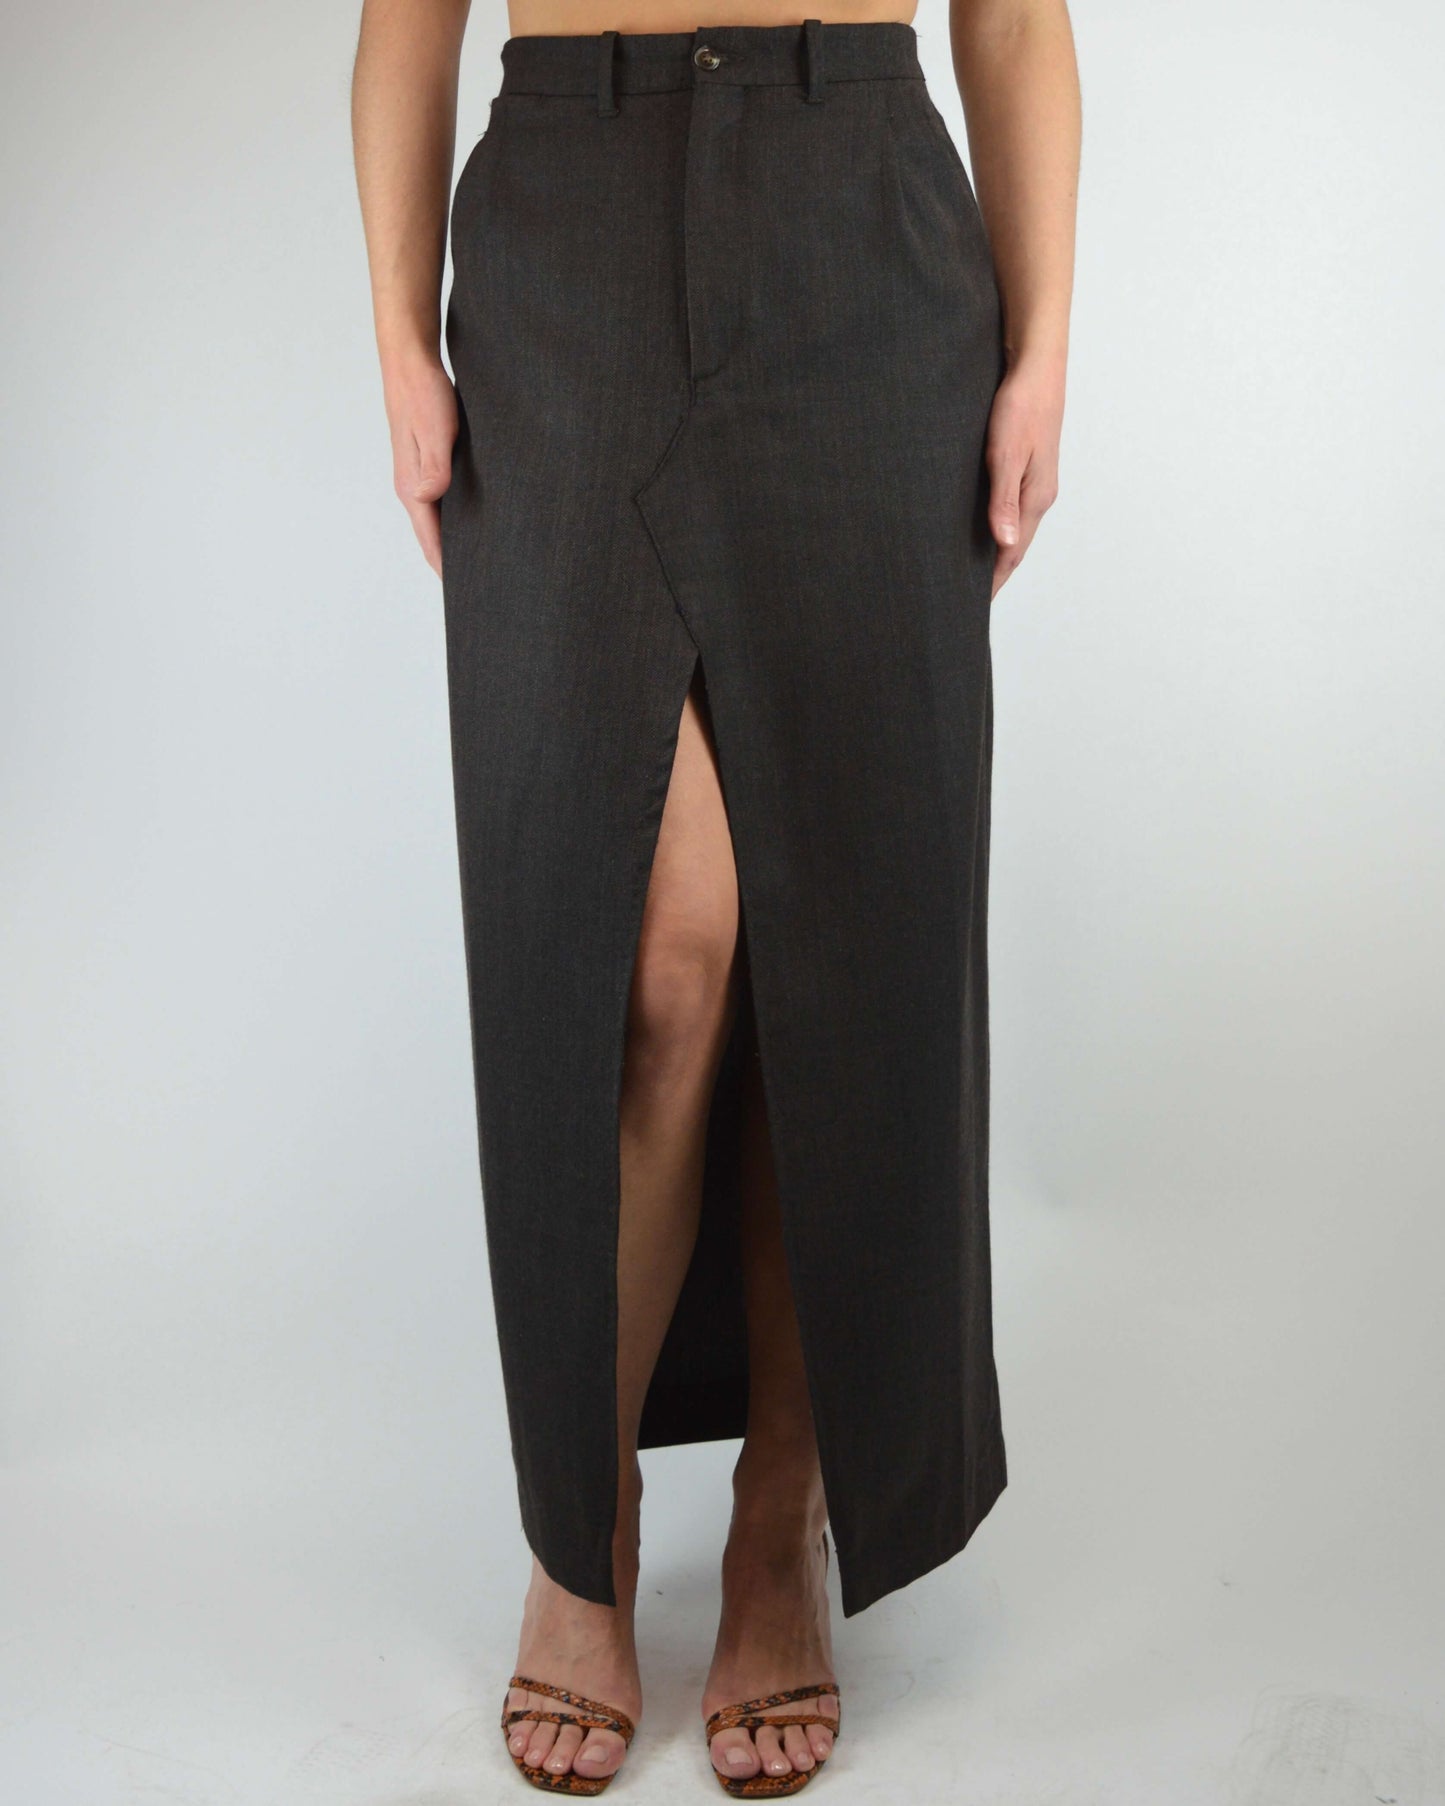 Long Skirt - Dark Brown (XS/S)